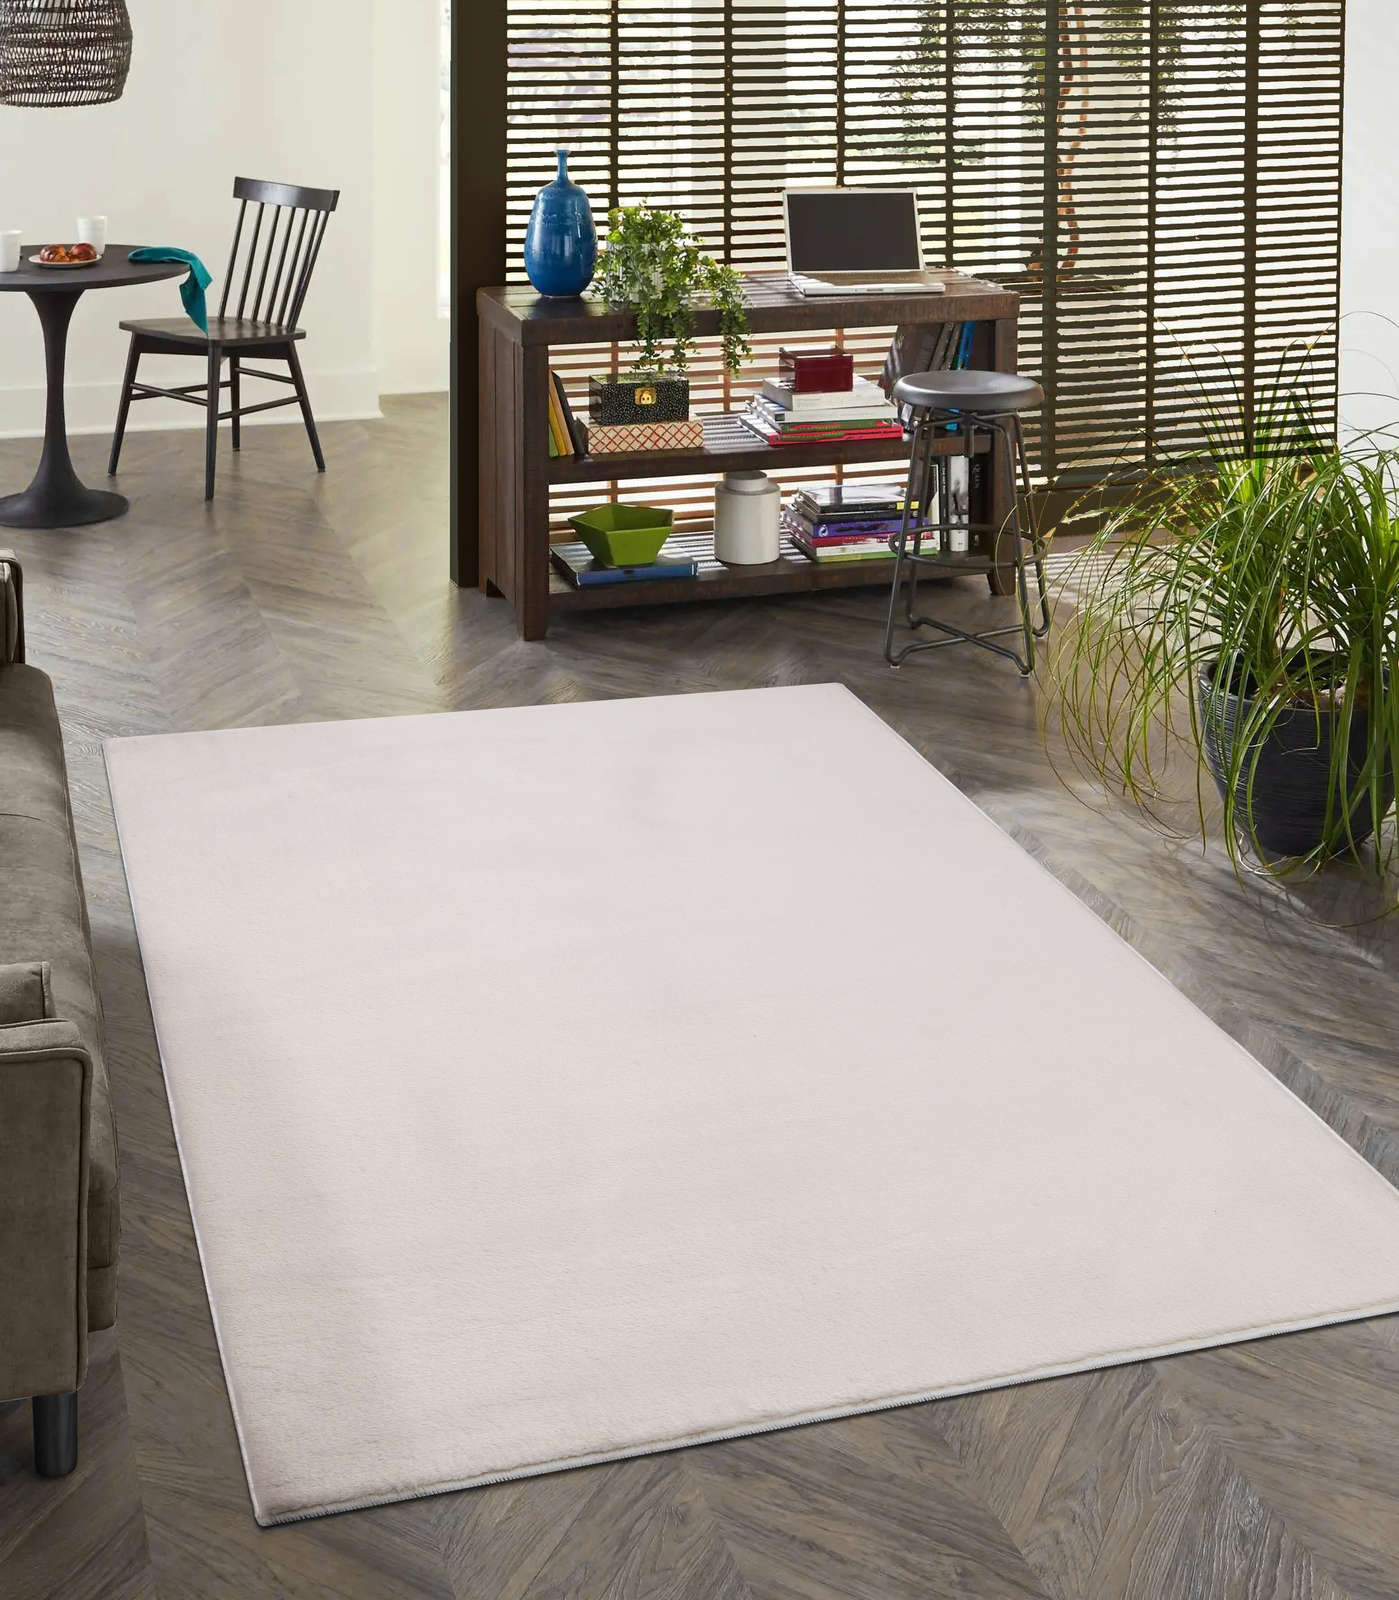             Plain high pile carpet in soft beige - 340 x 240 cm
        